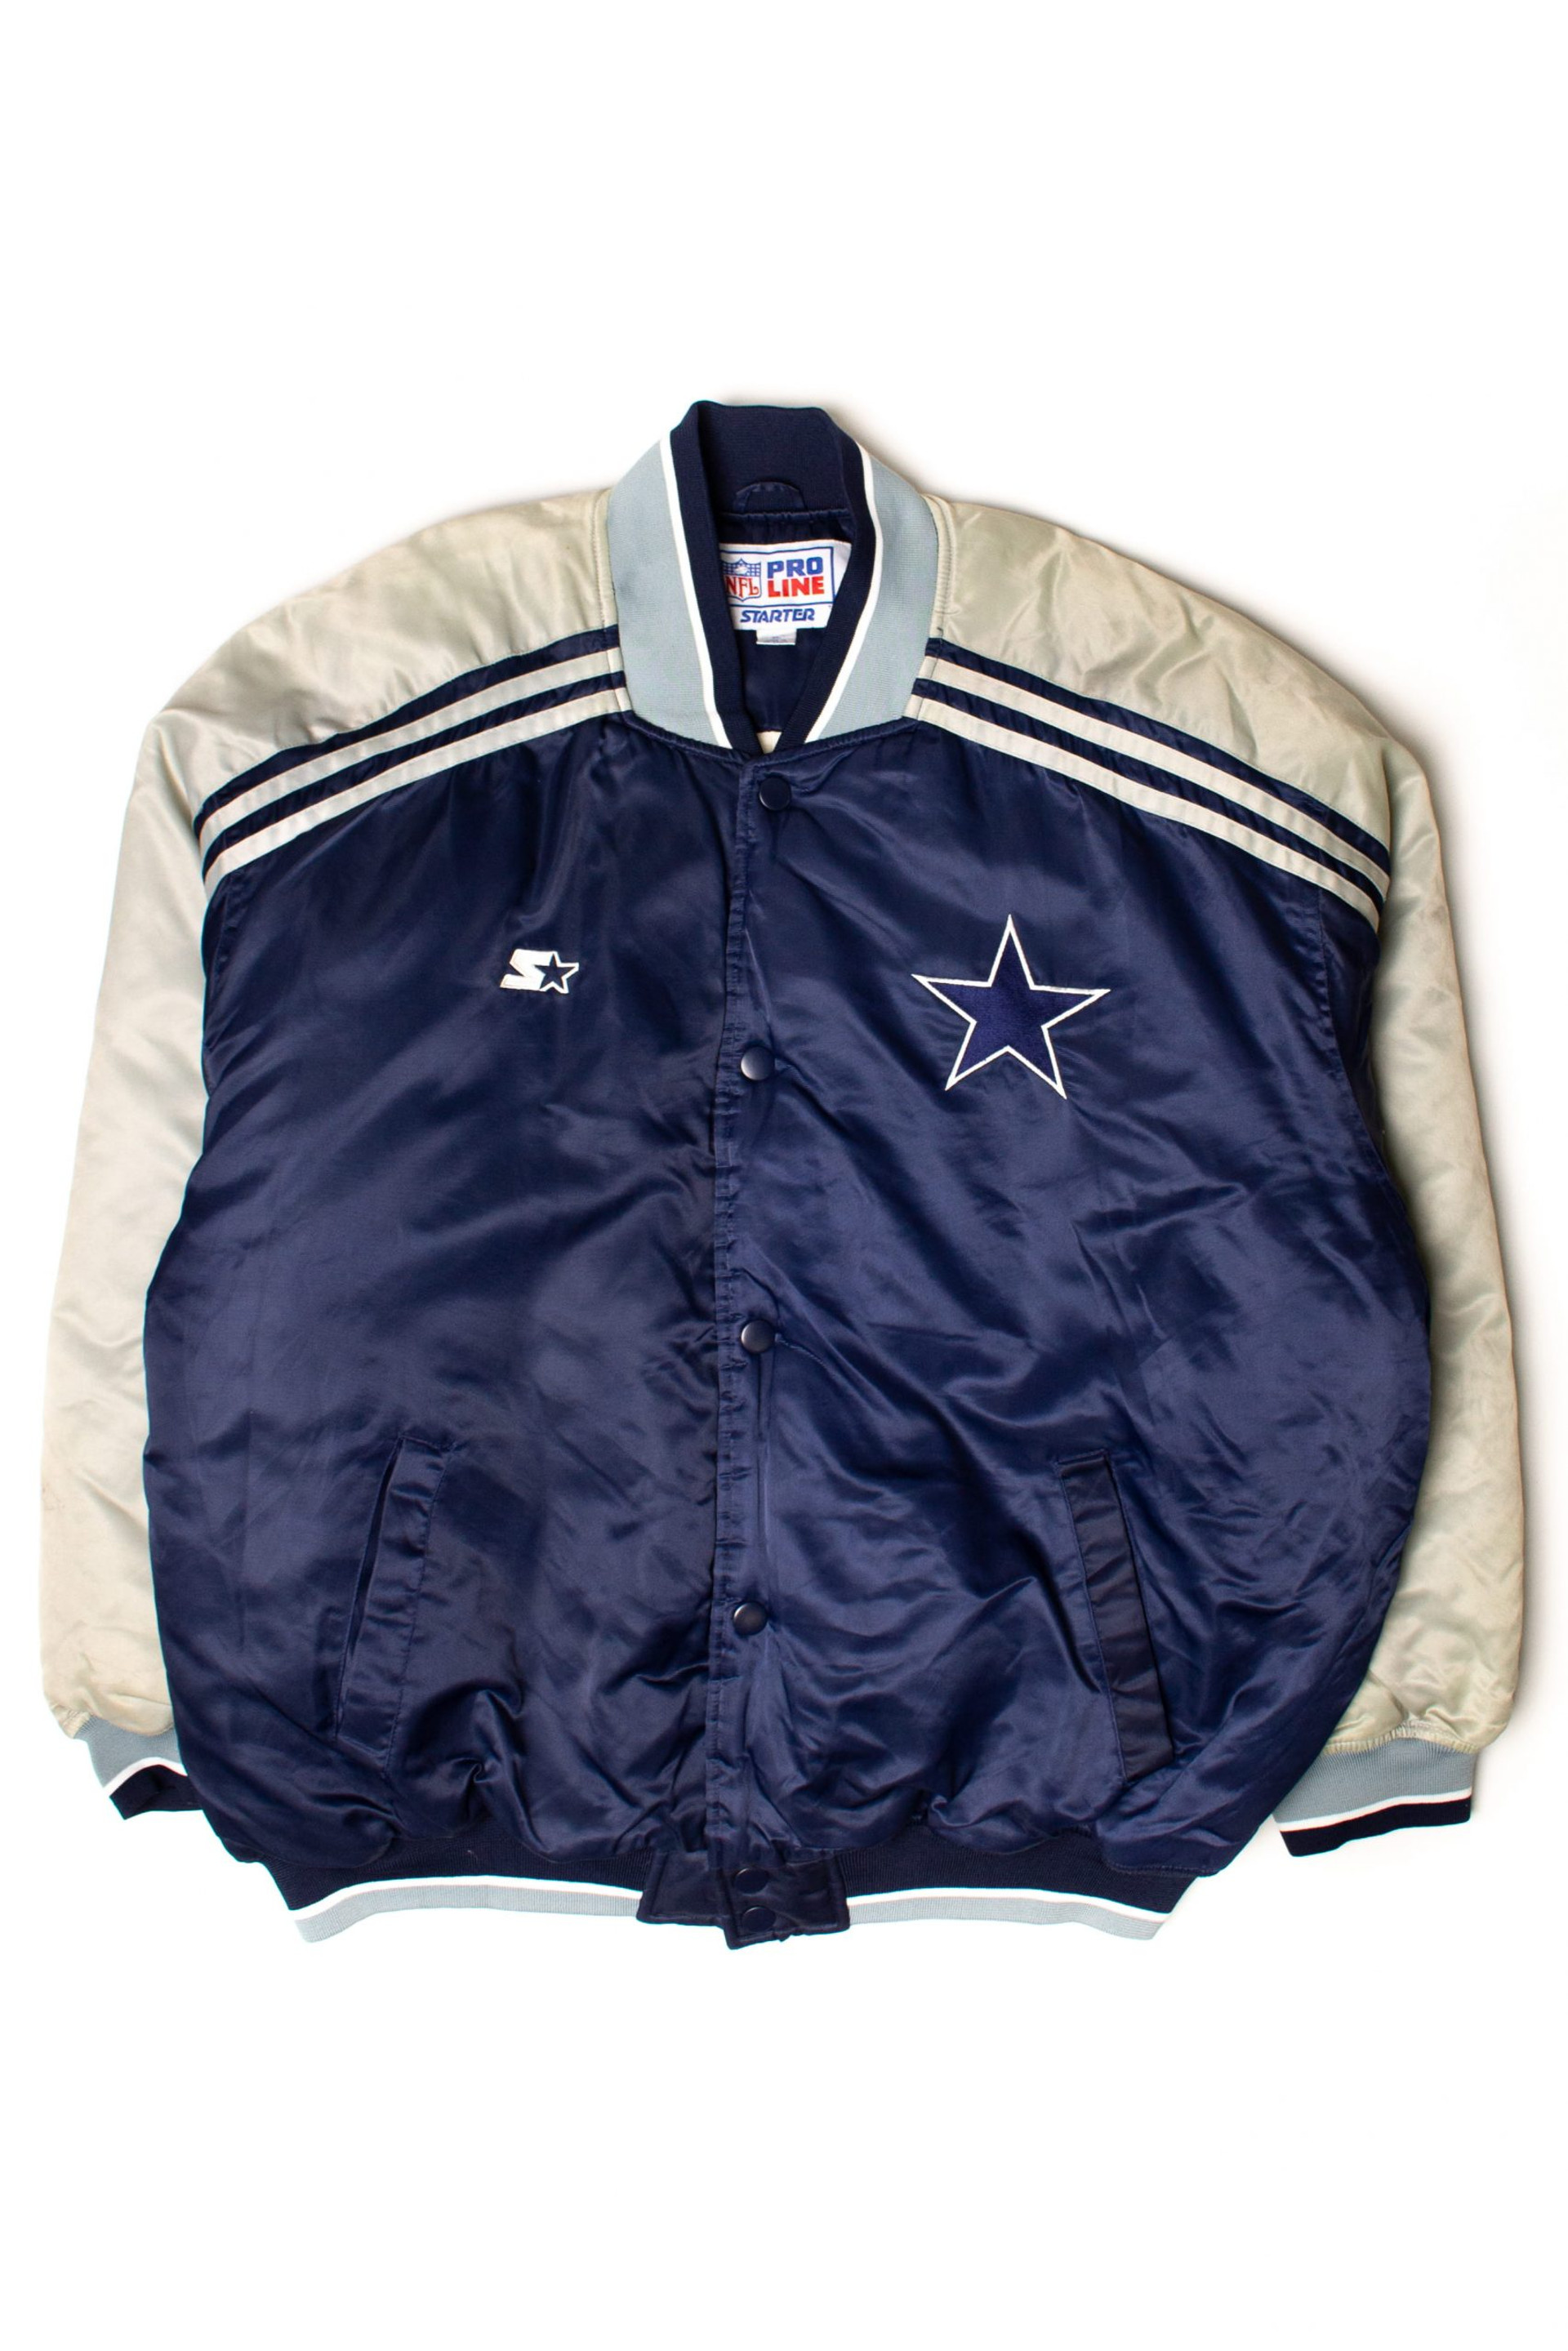 Vintage Dallas Cowboys Starter Jacket (1990s) - Ragstock.com